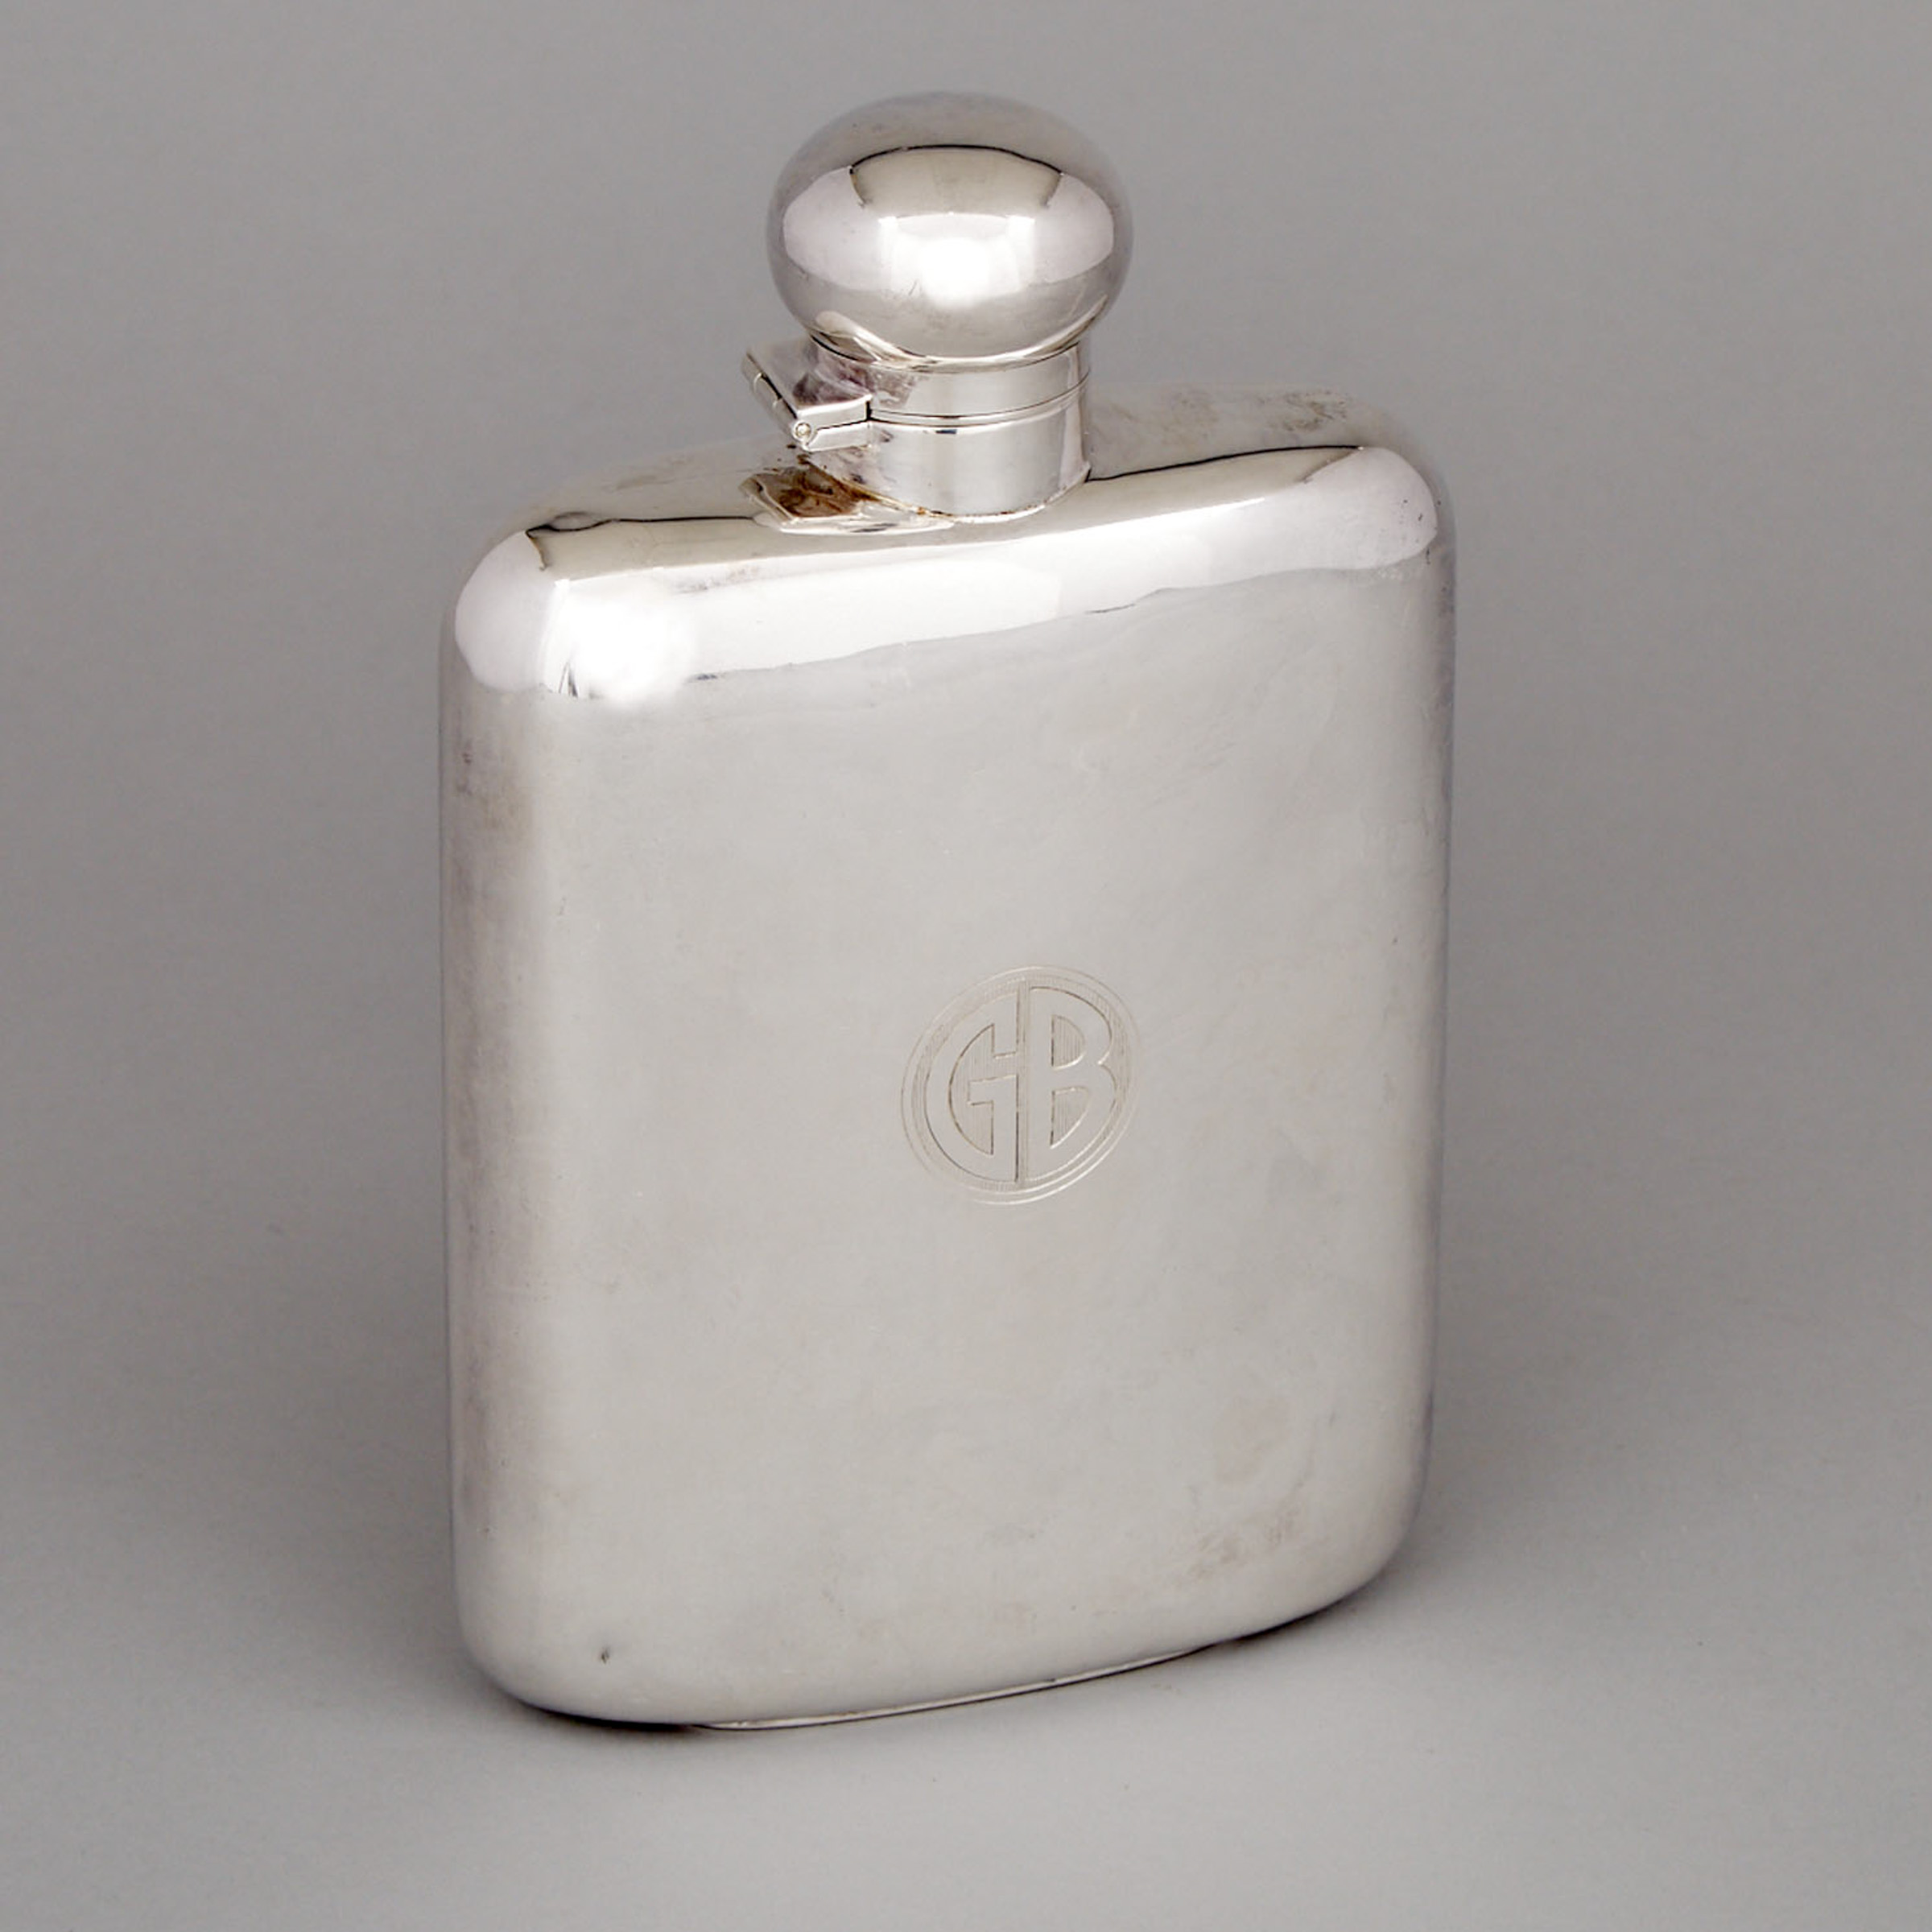 English Silver Spirit Flask, James Dixon & Sons, Sheffield, 1957